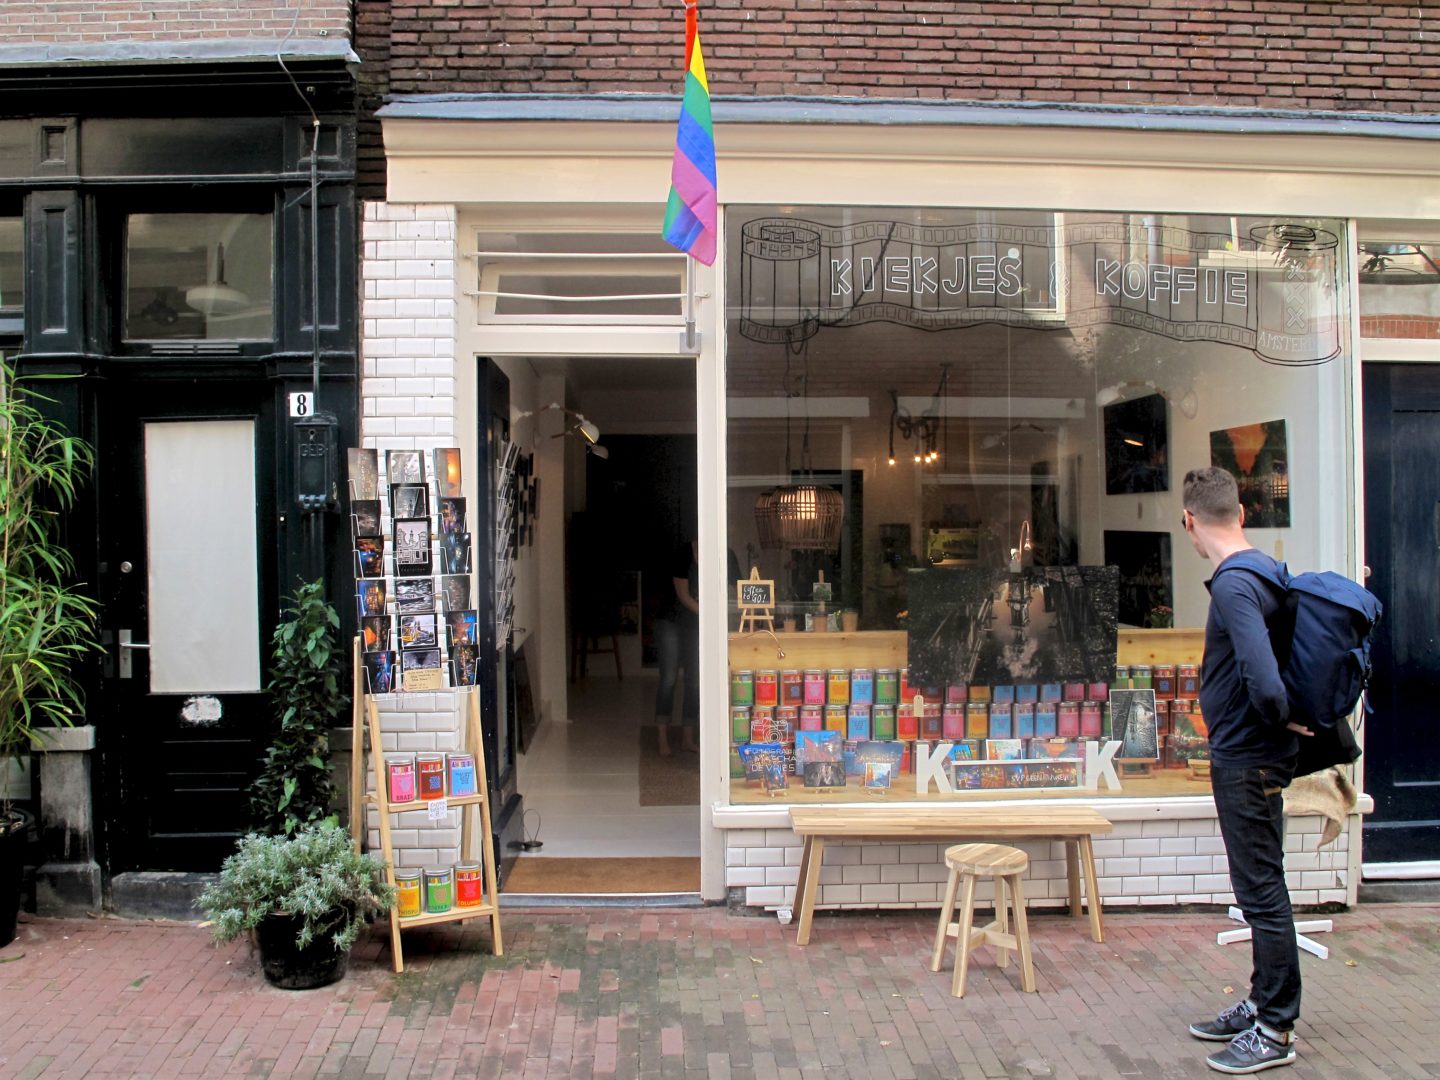 Gay Amsterdam Travel Guide - Insider Tips